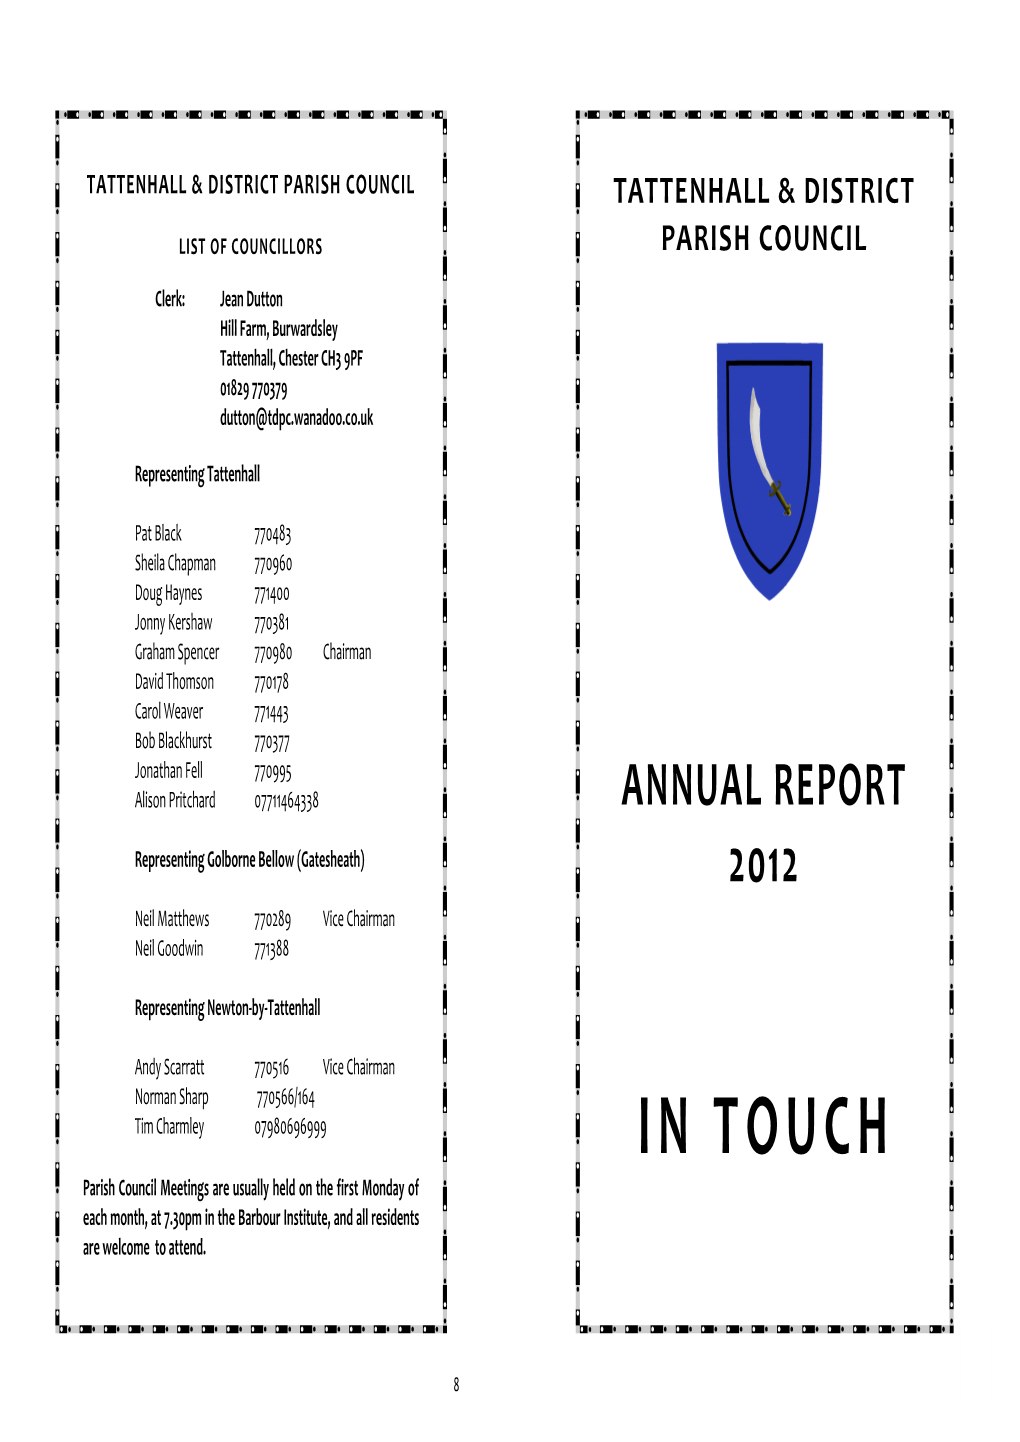 Tattenhall & District Parish Council Annual Report 12